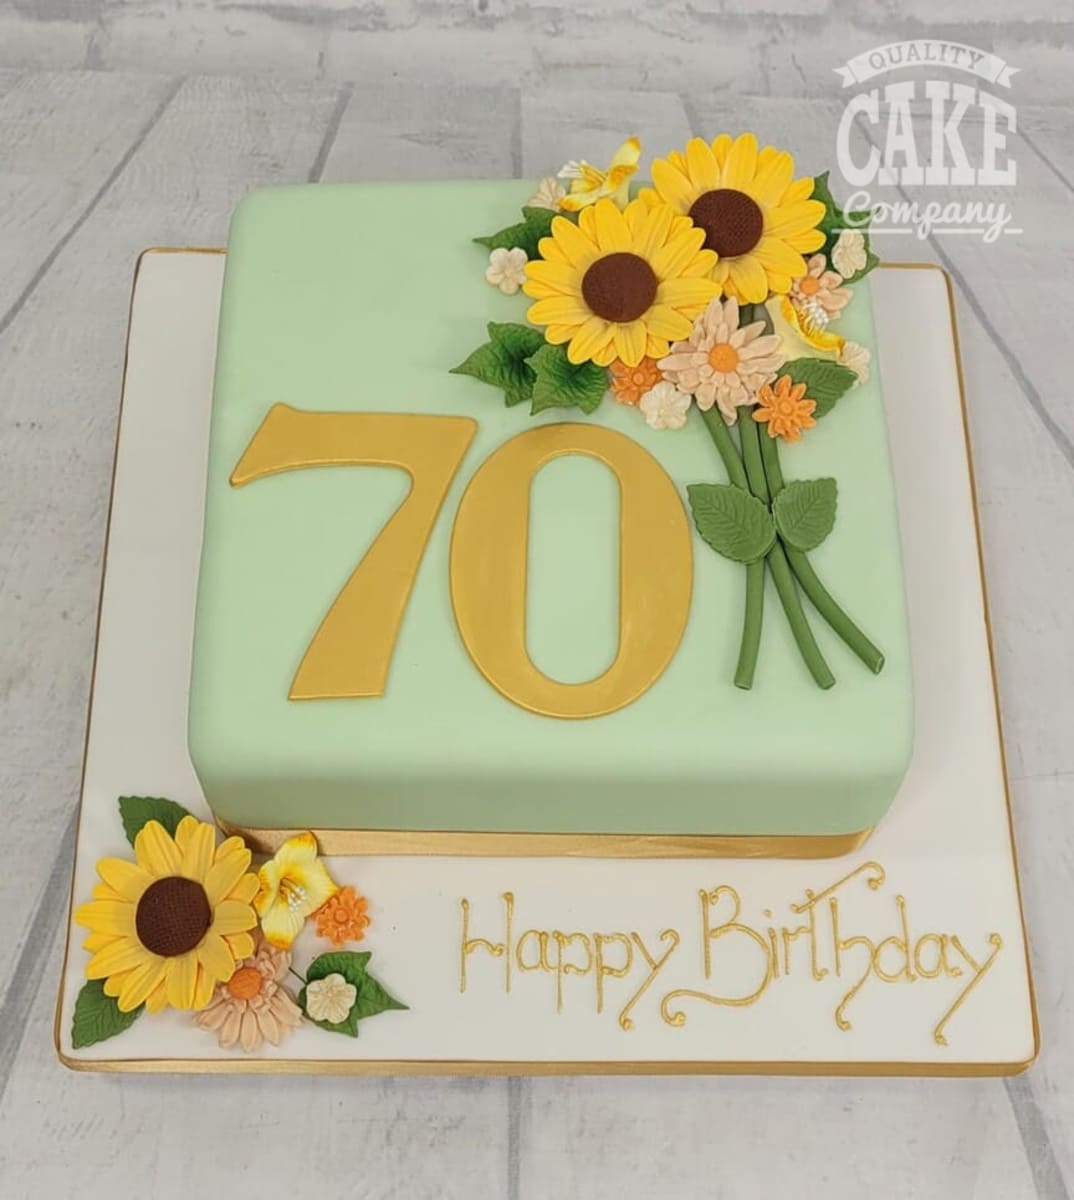 70th Birthday Cake - Decorated Cake by Alli Dockree - CakesDecor